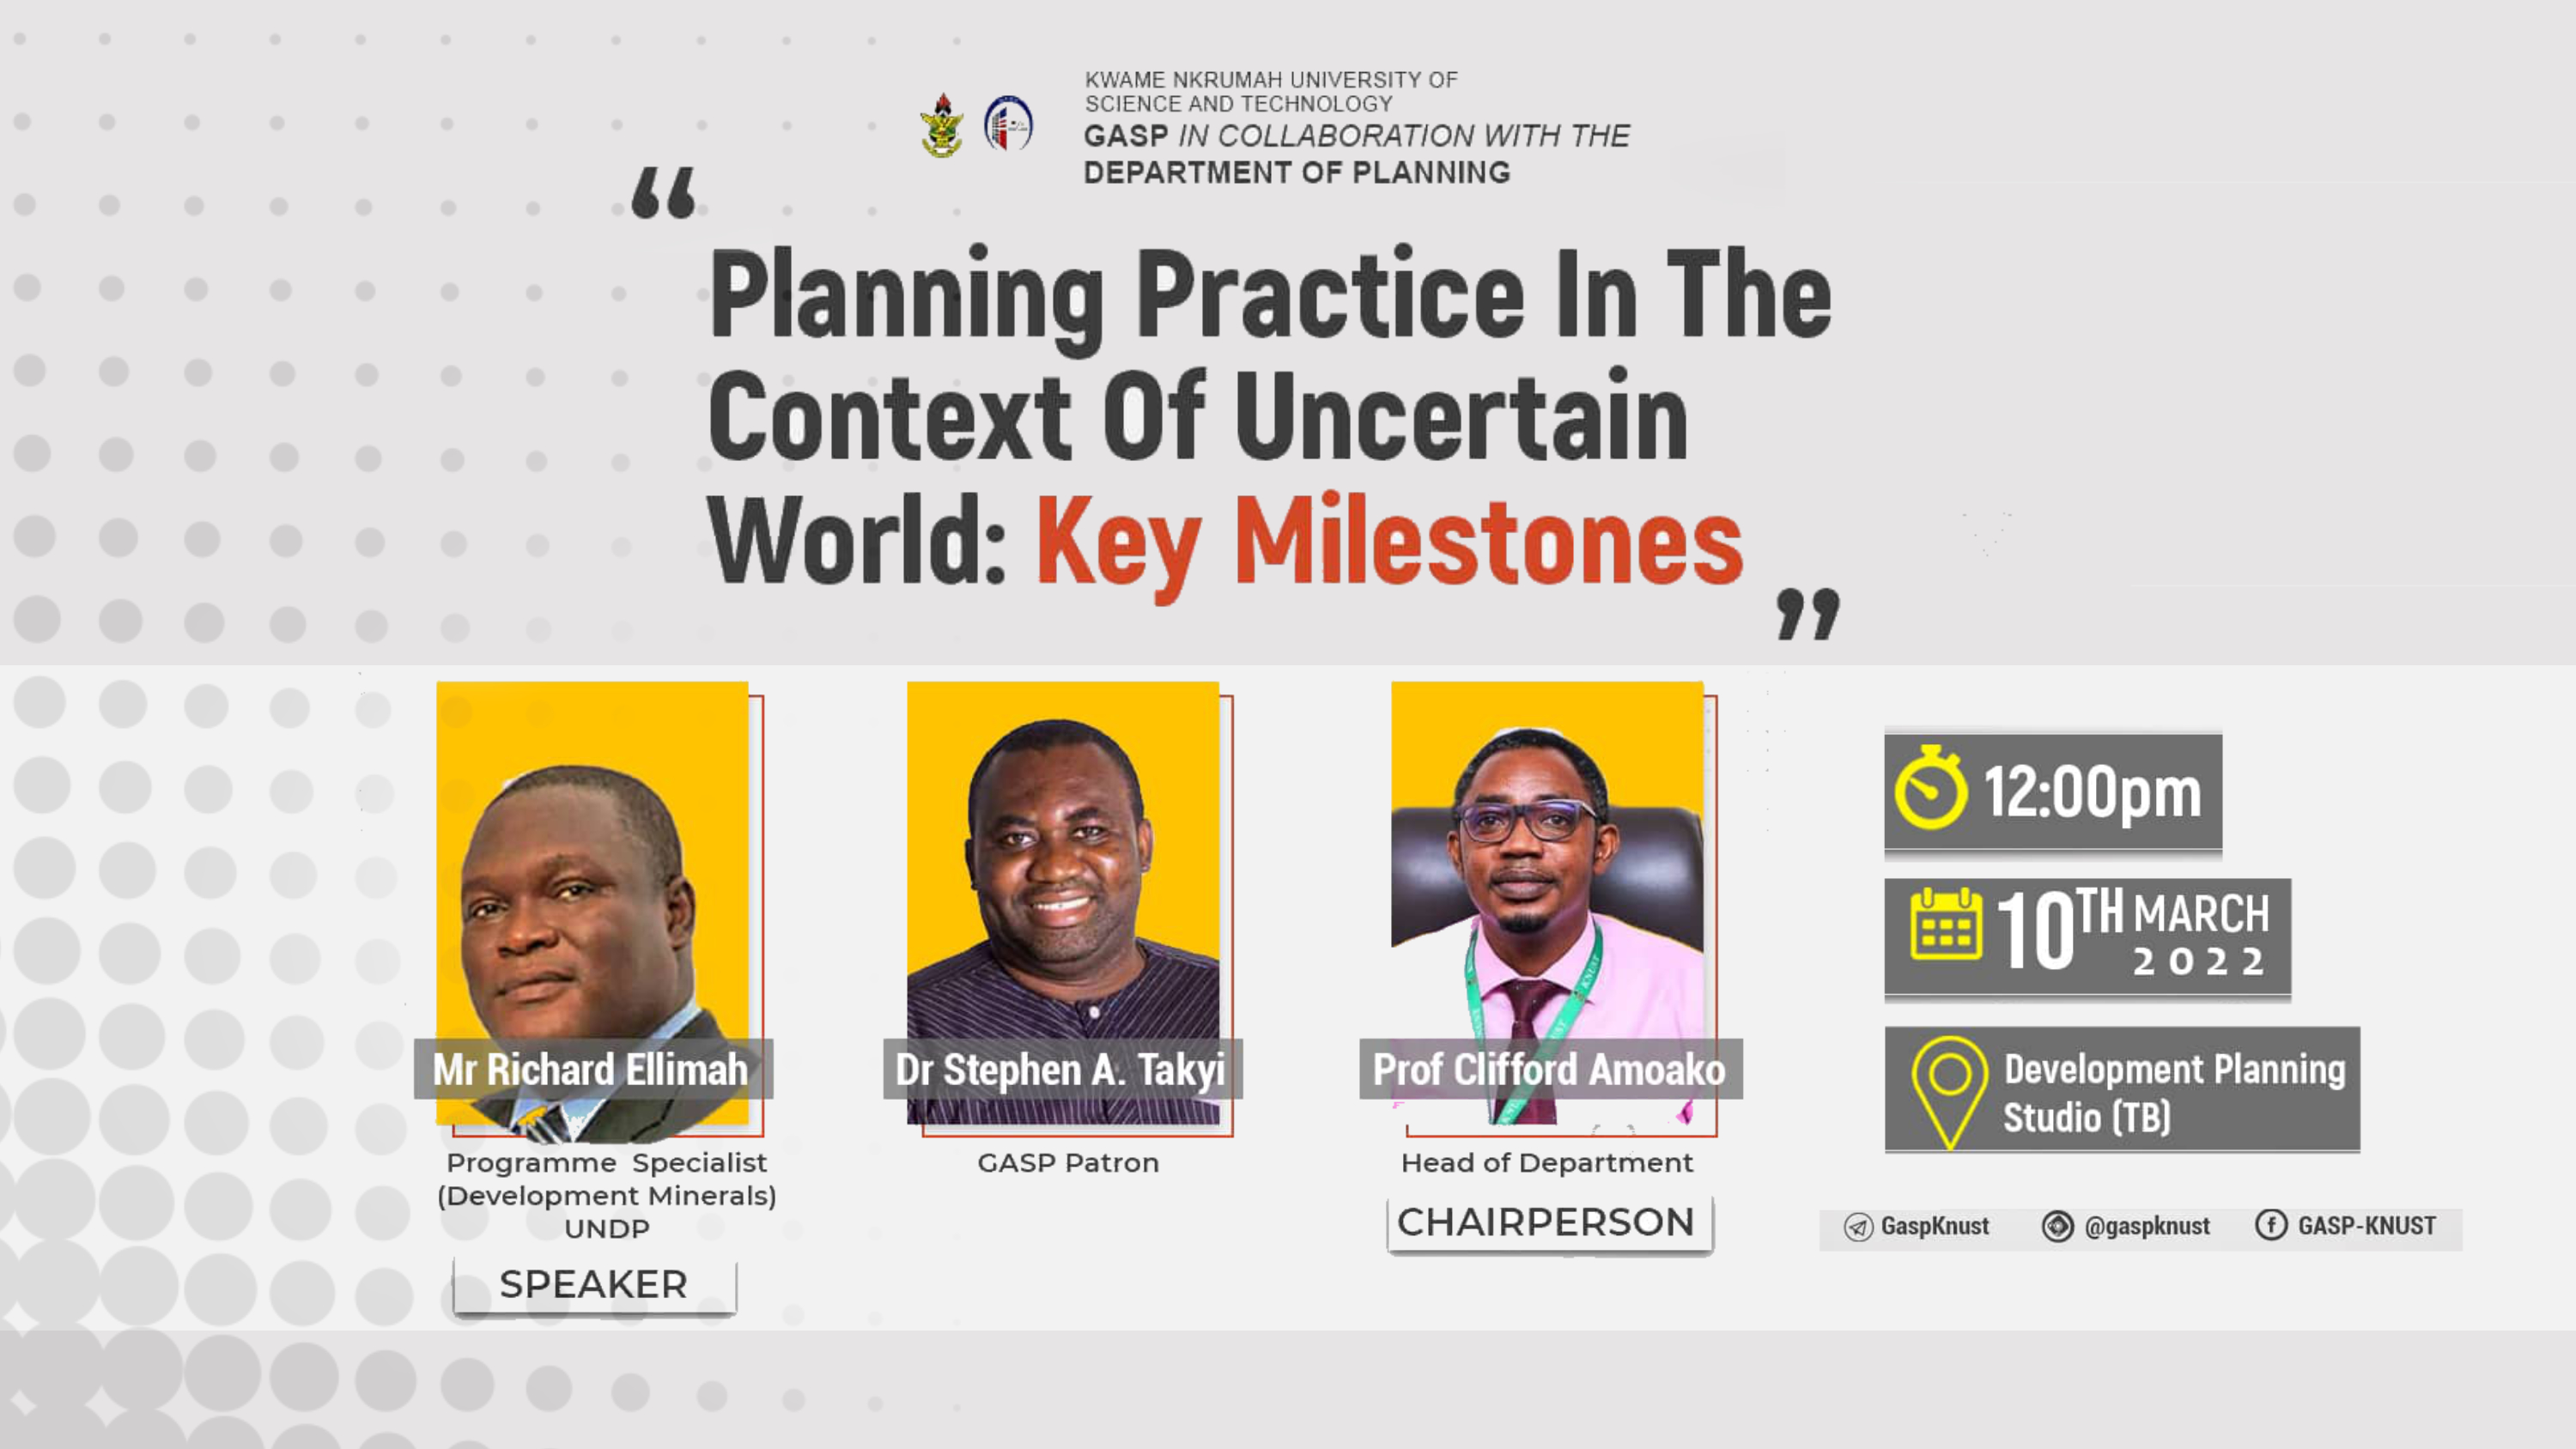 Planning Practice In The Context of Uncertain World: Key Milestones